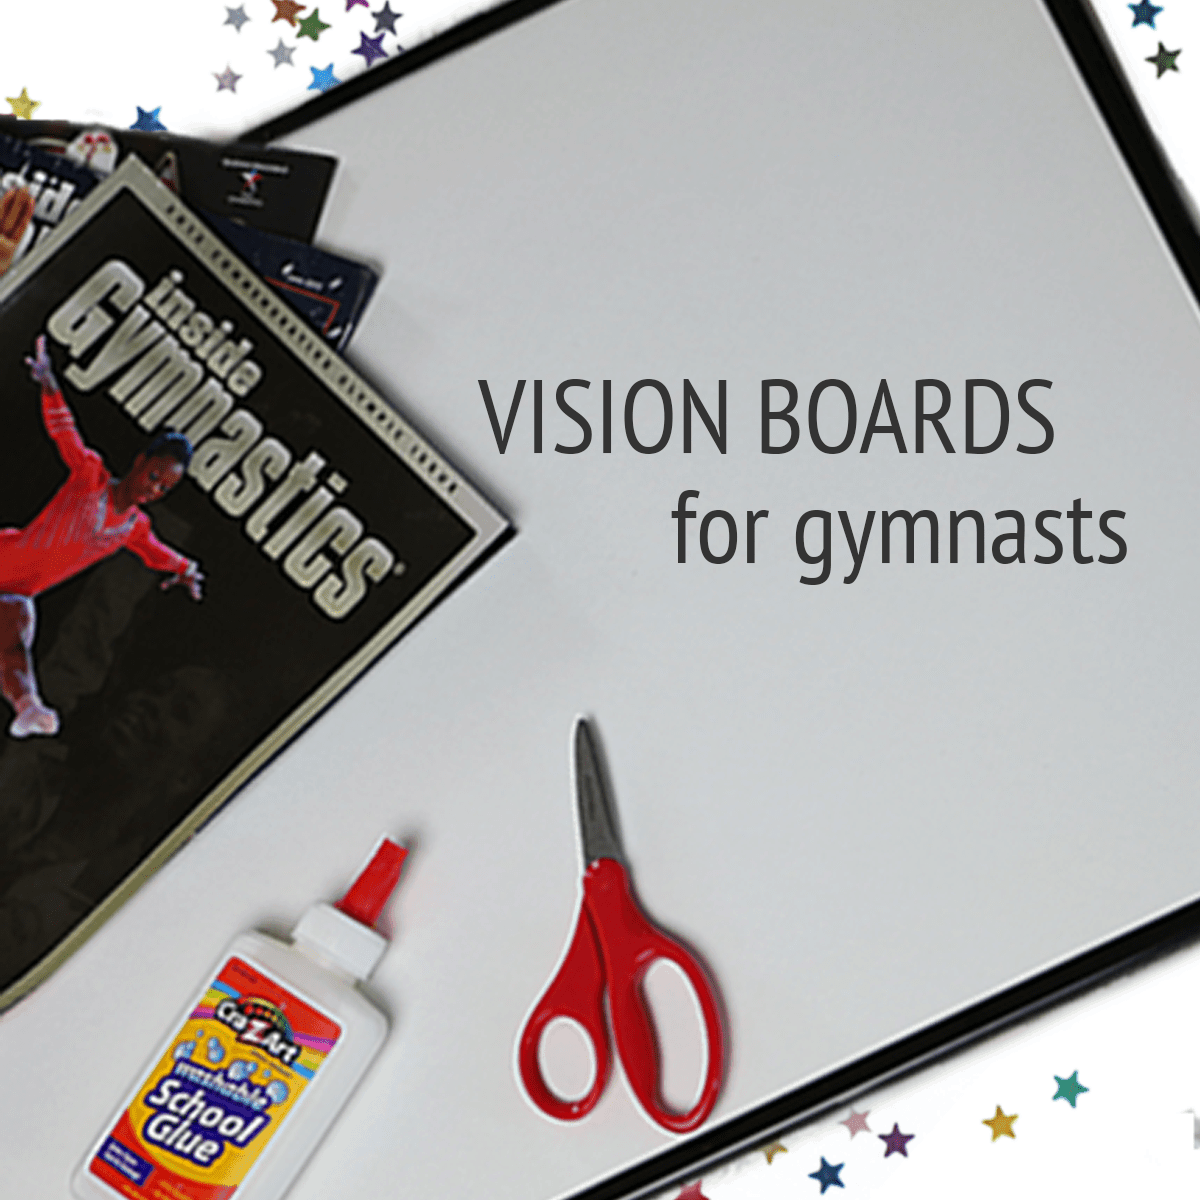 How to Make a Vision Board - Nastia Liukin